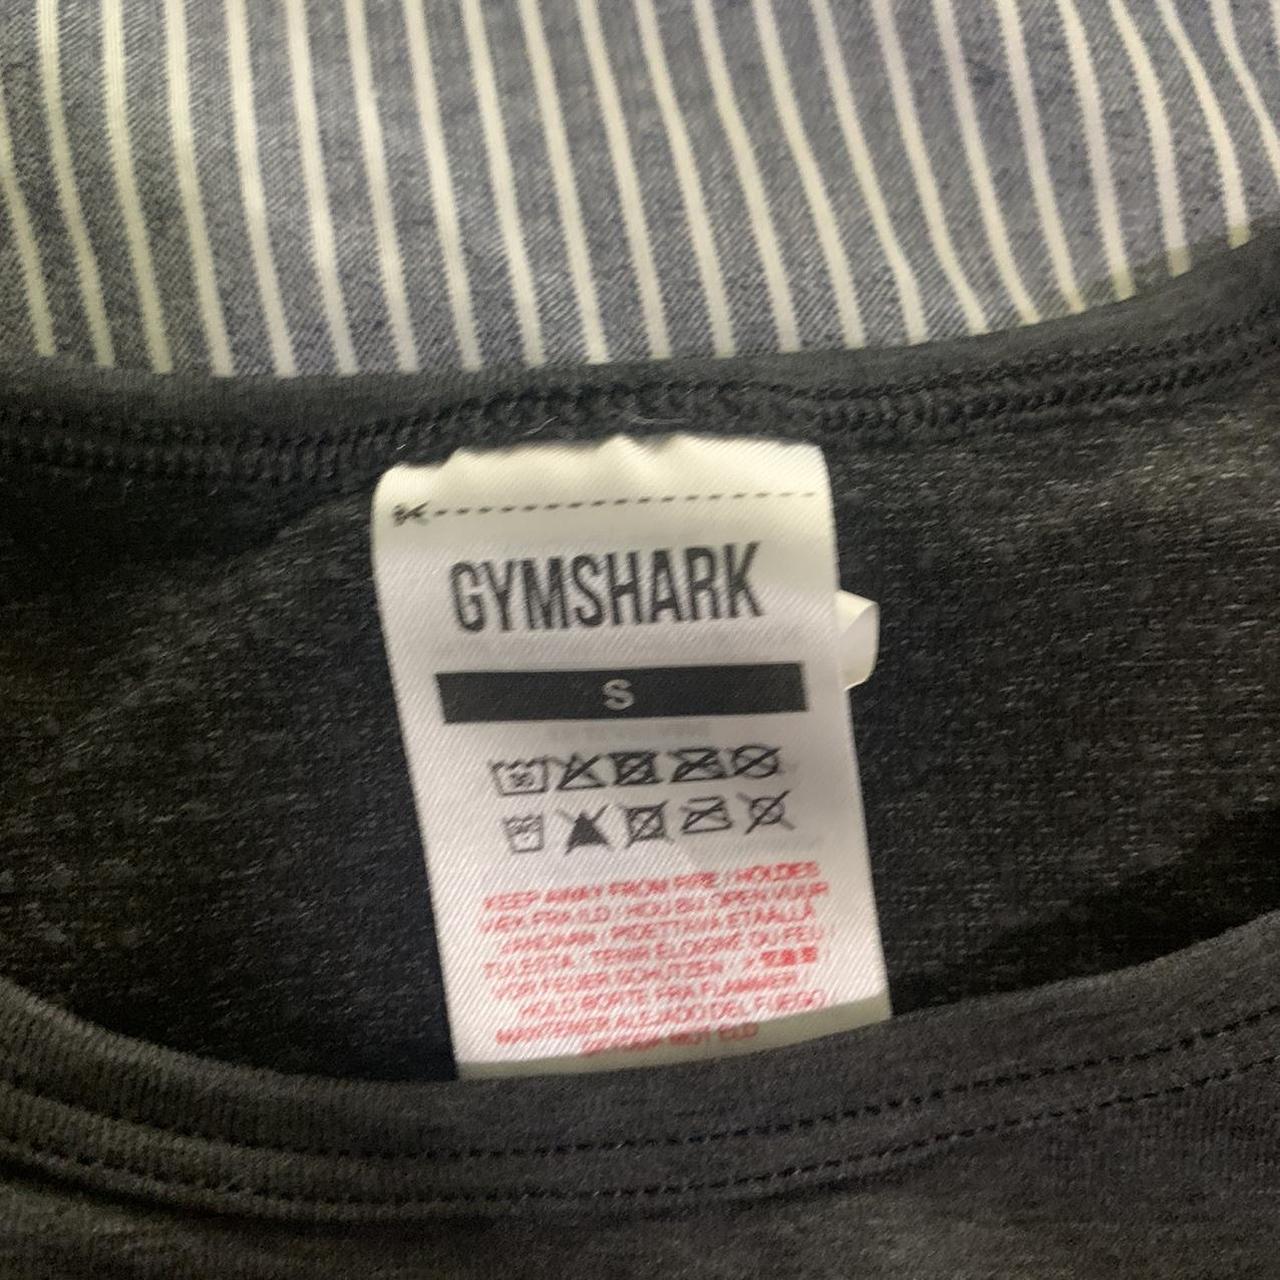 Gym shark Compression shirt - Depop